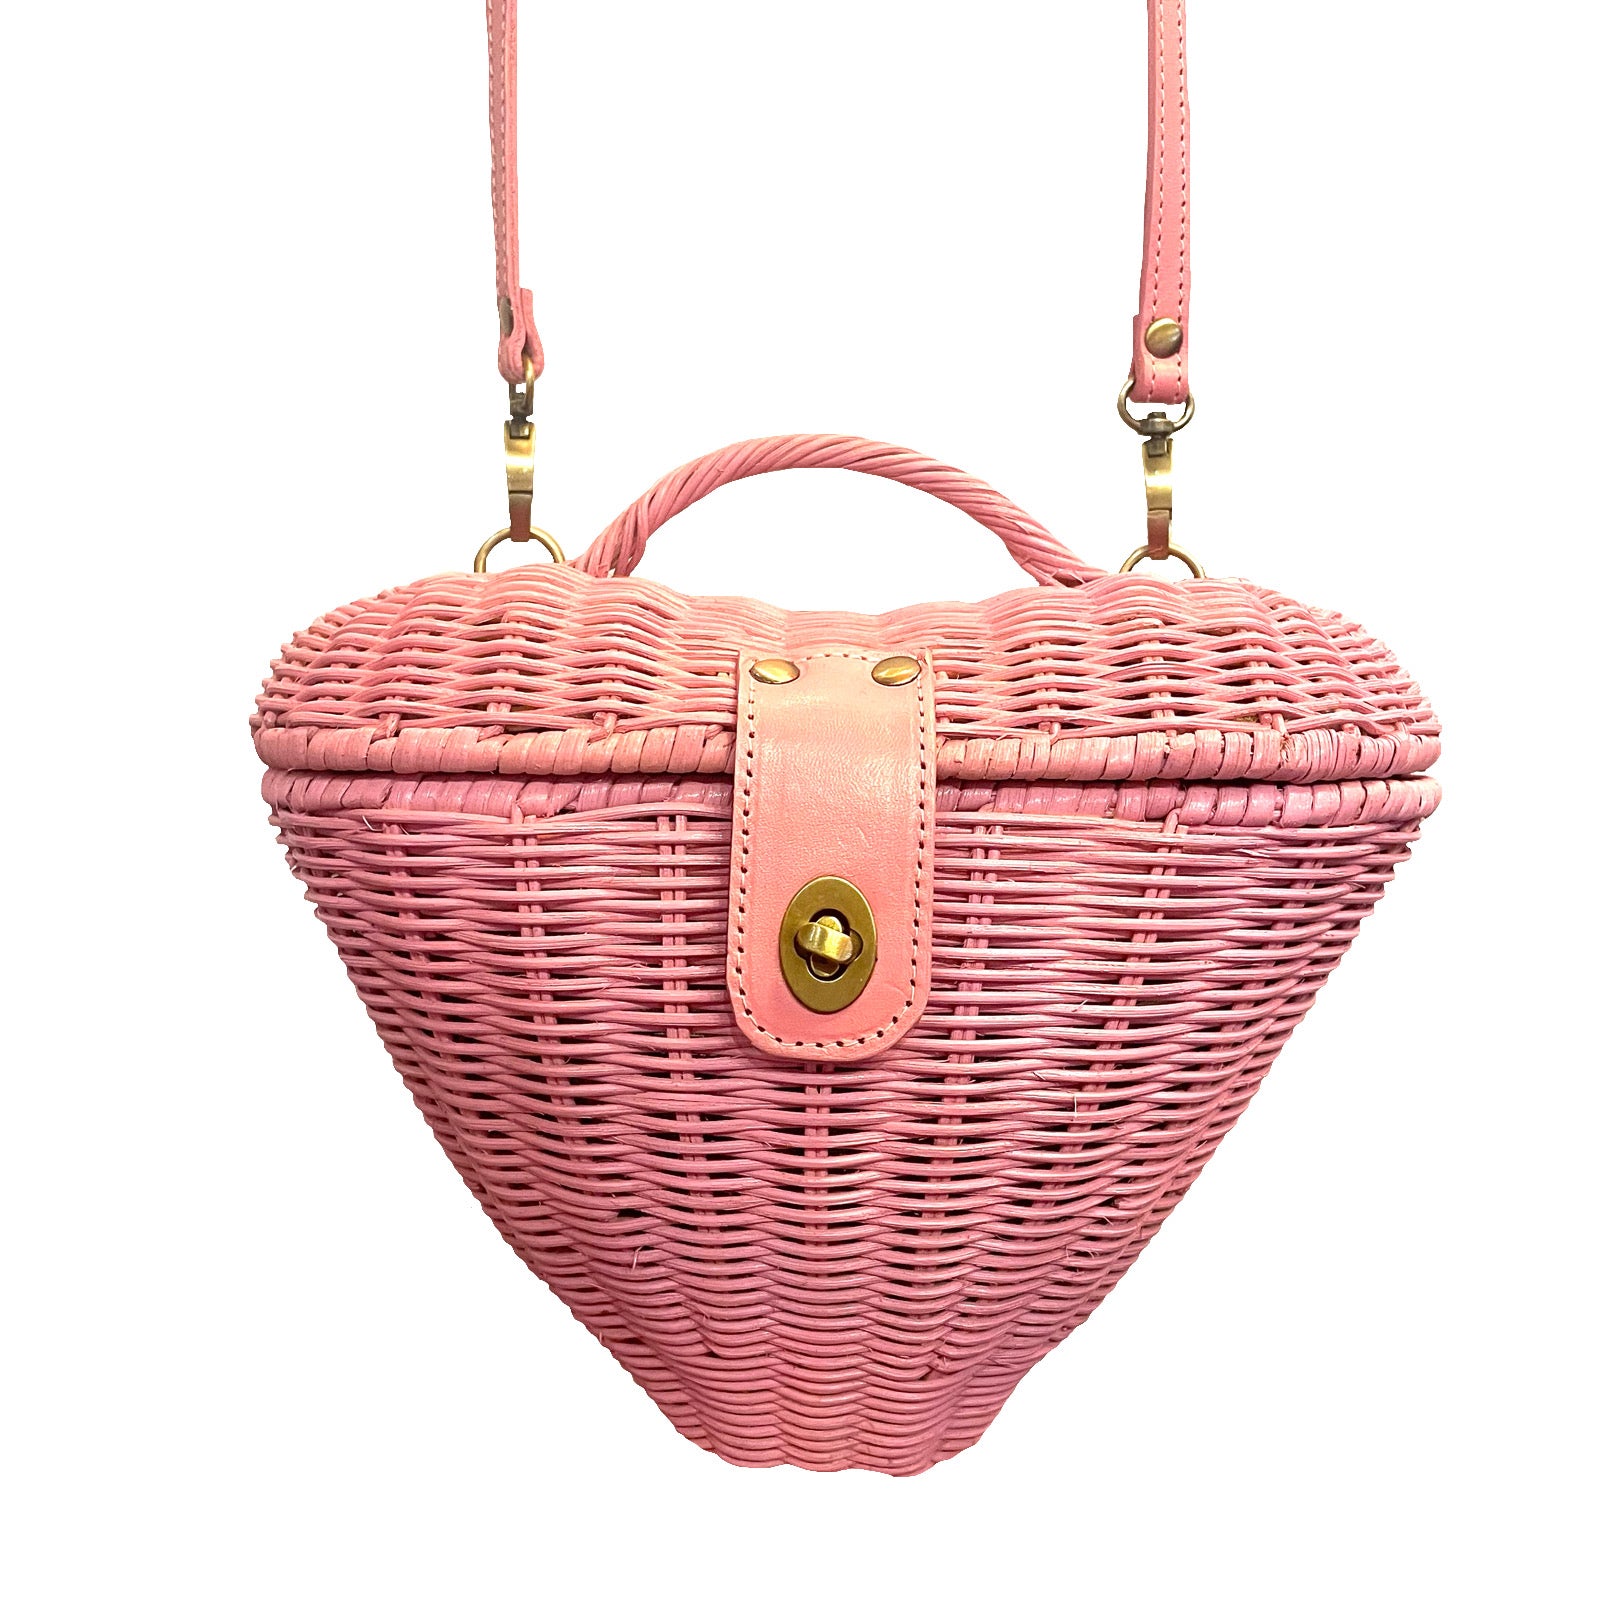 Vintage Artisanal Basket Bag - The Heritage Art